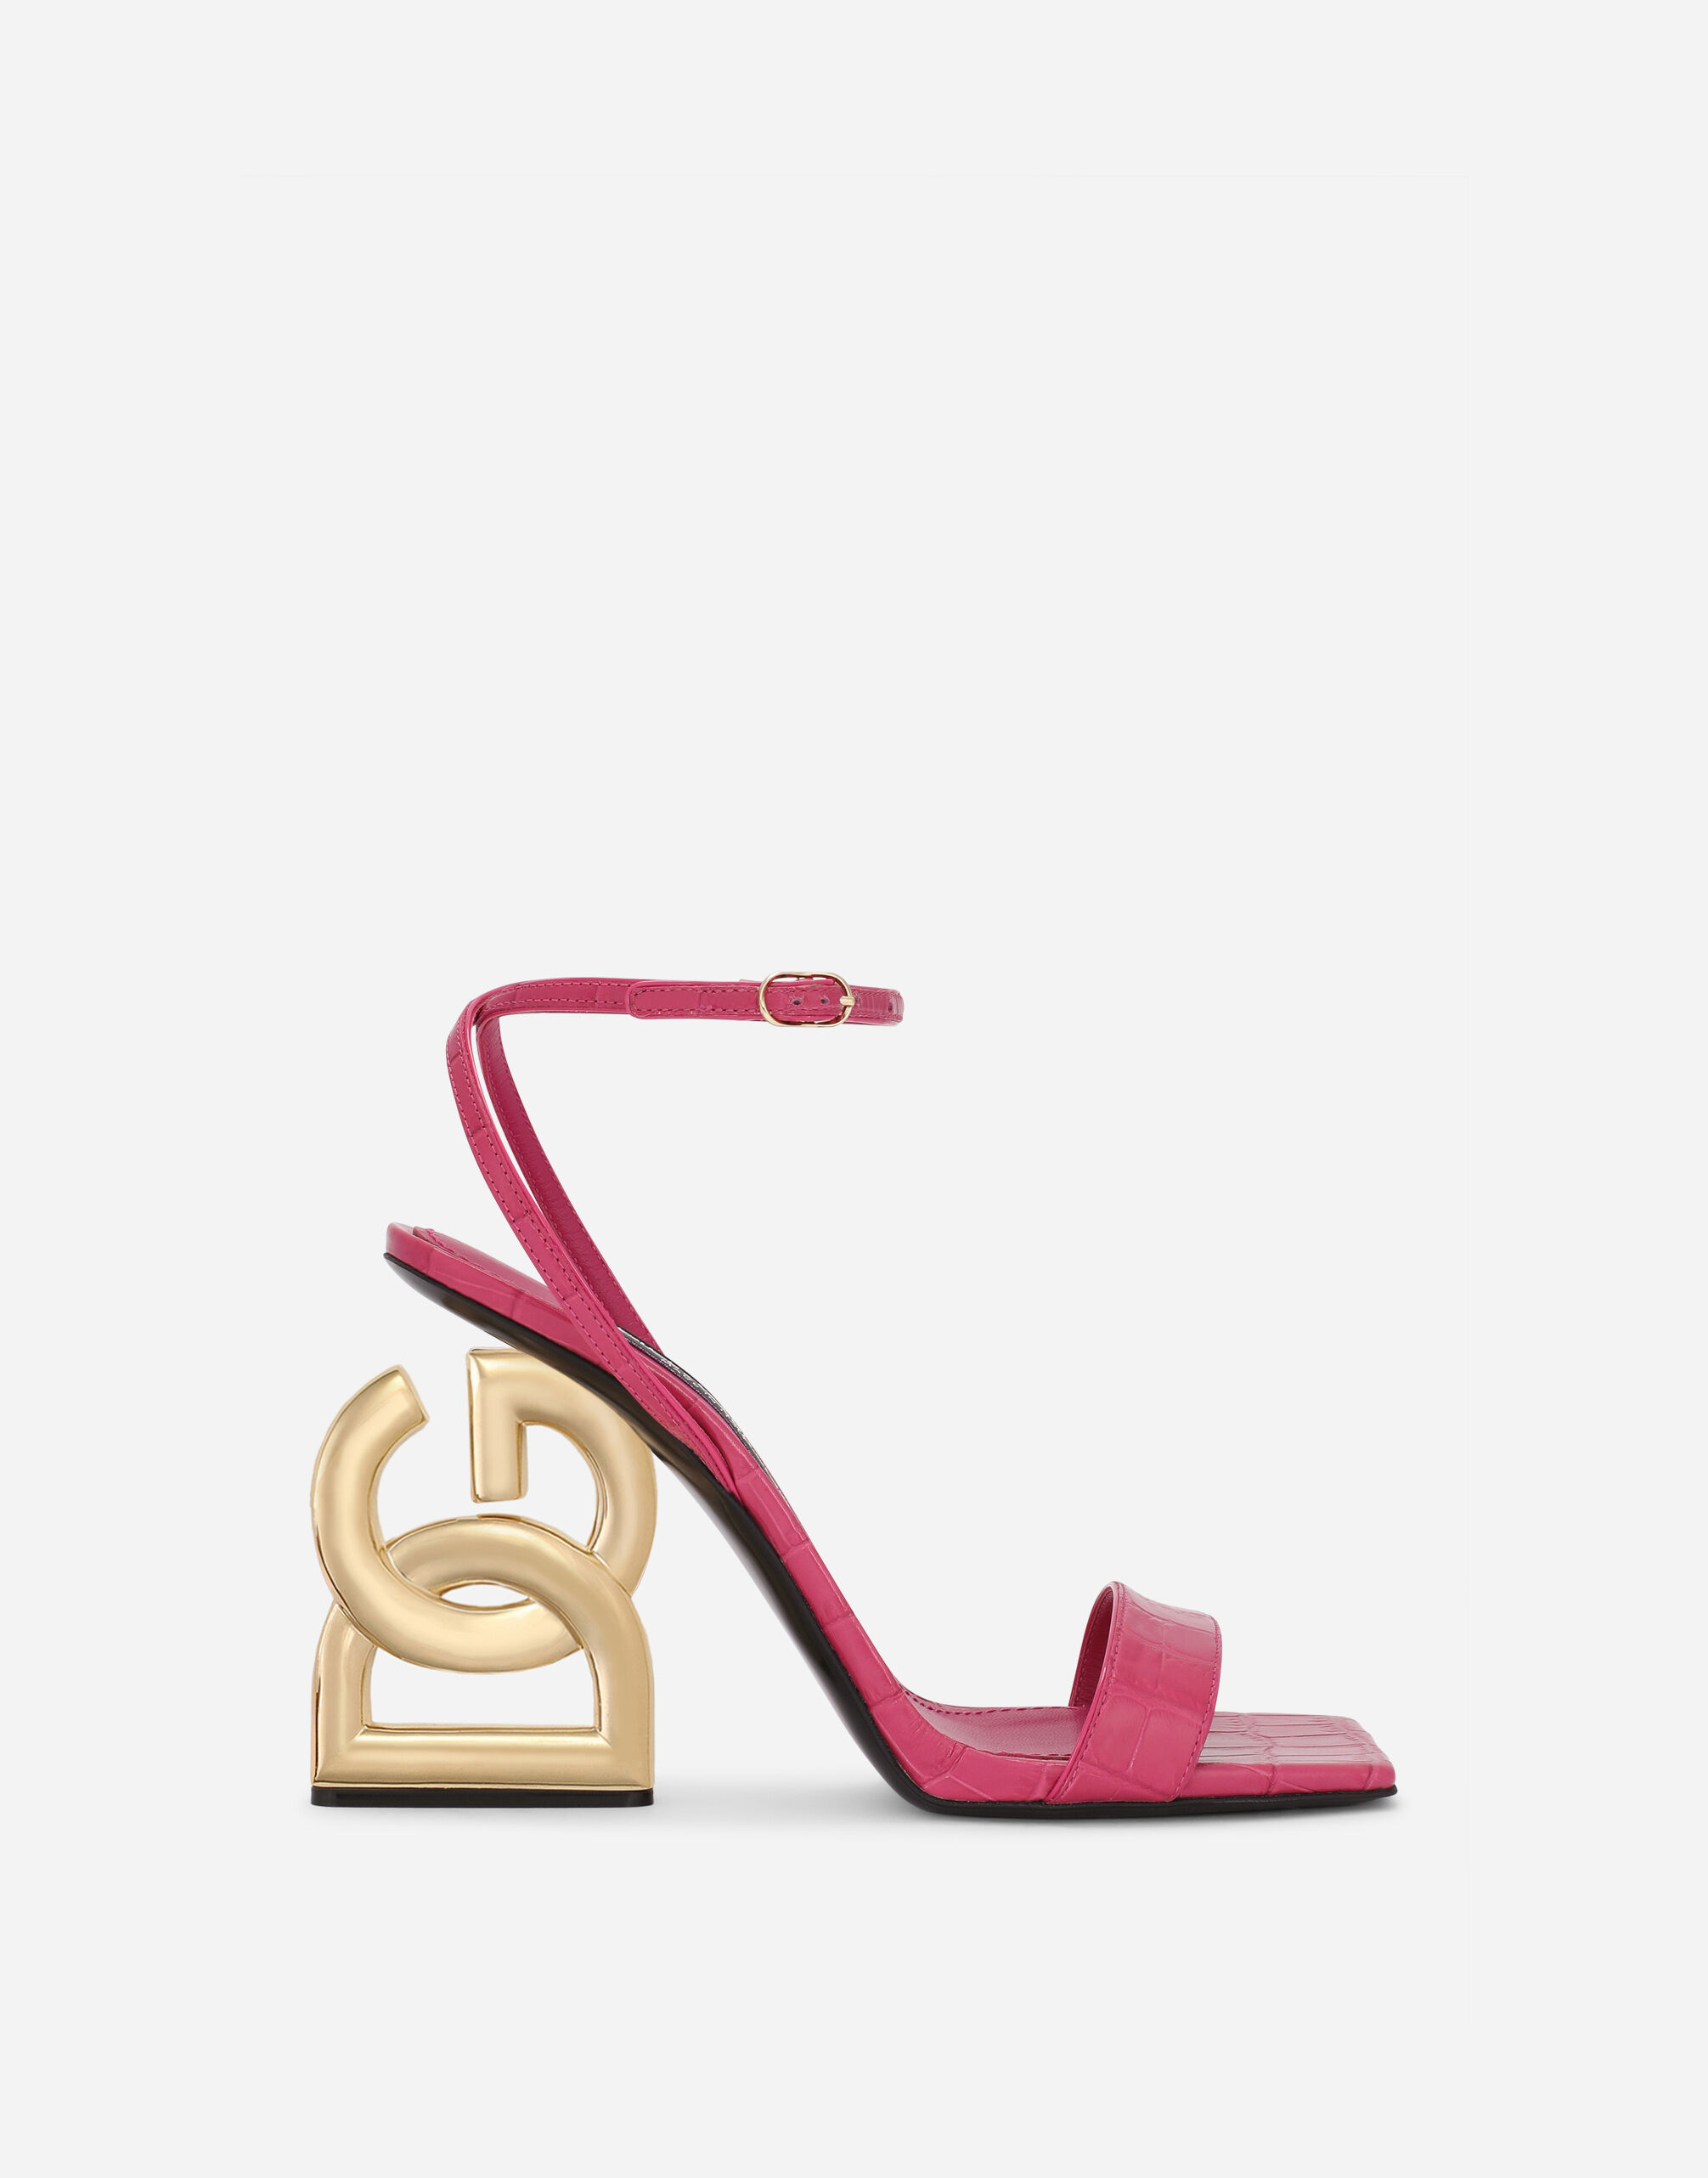 DOLCE & GABBANA OUTLET | Dolce & Gabbana Satin Sandals im SALE | – ARCHIVIST